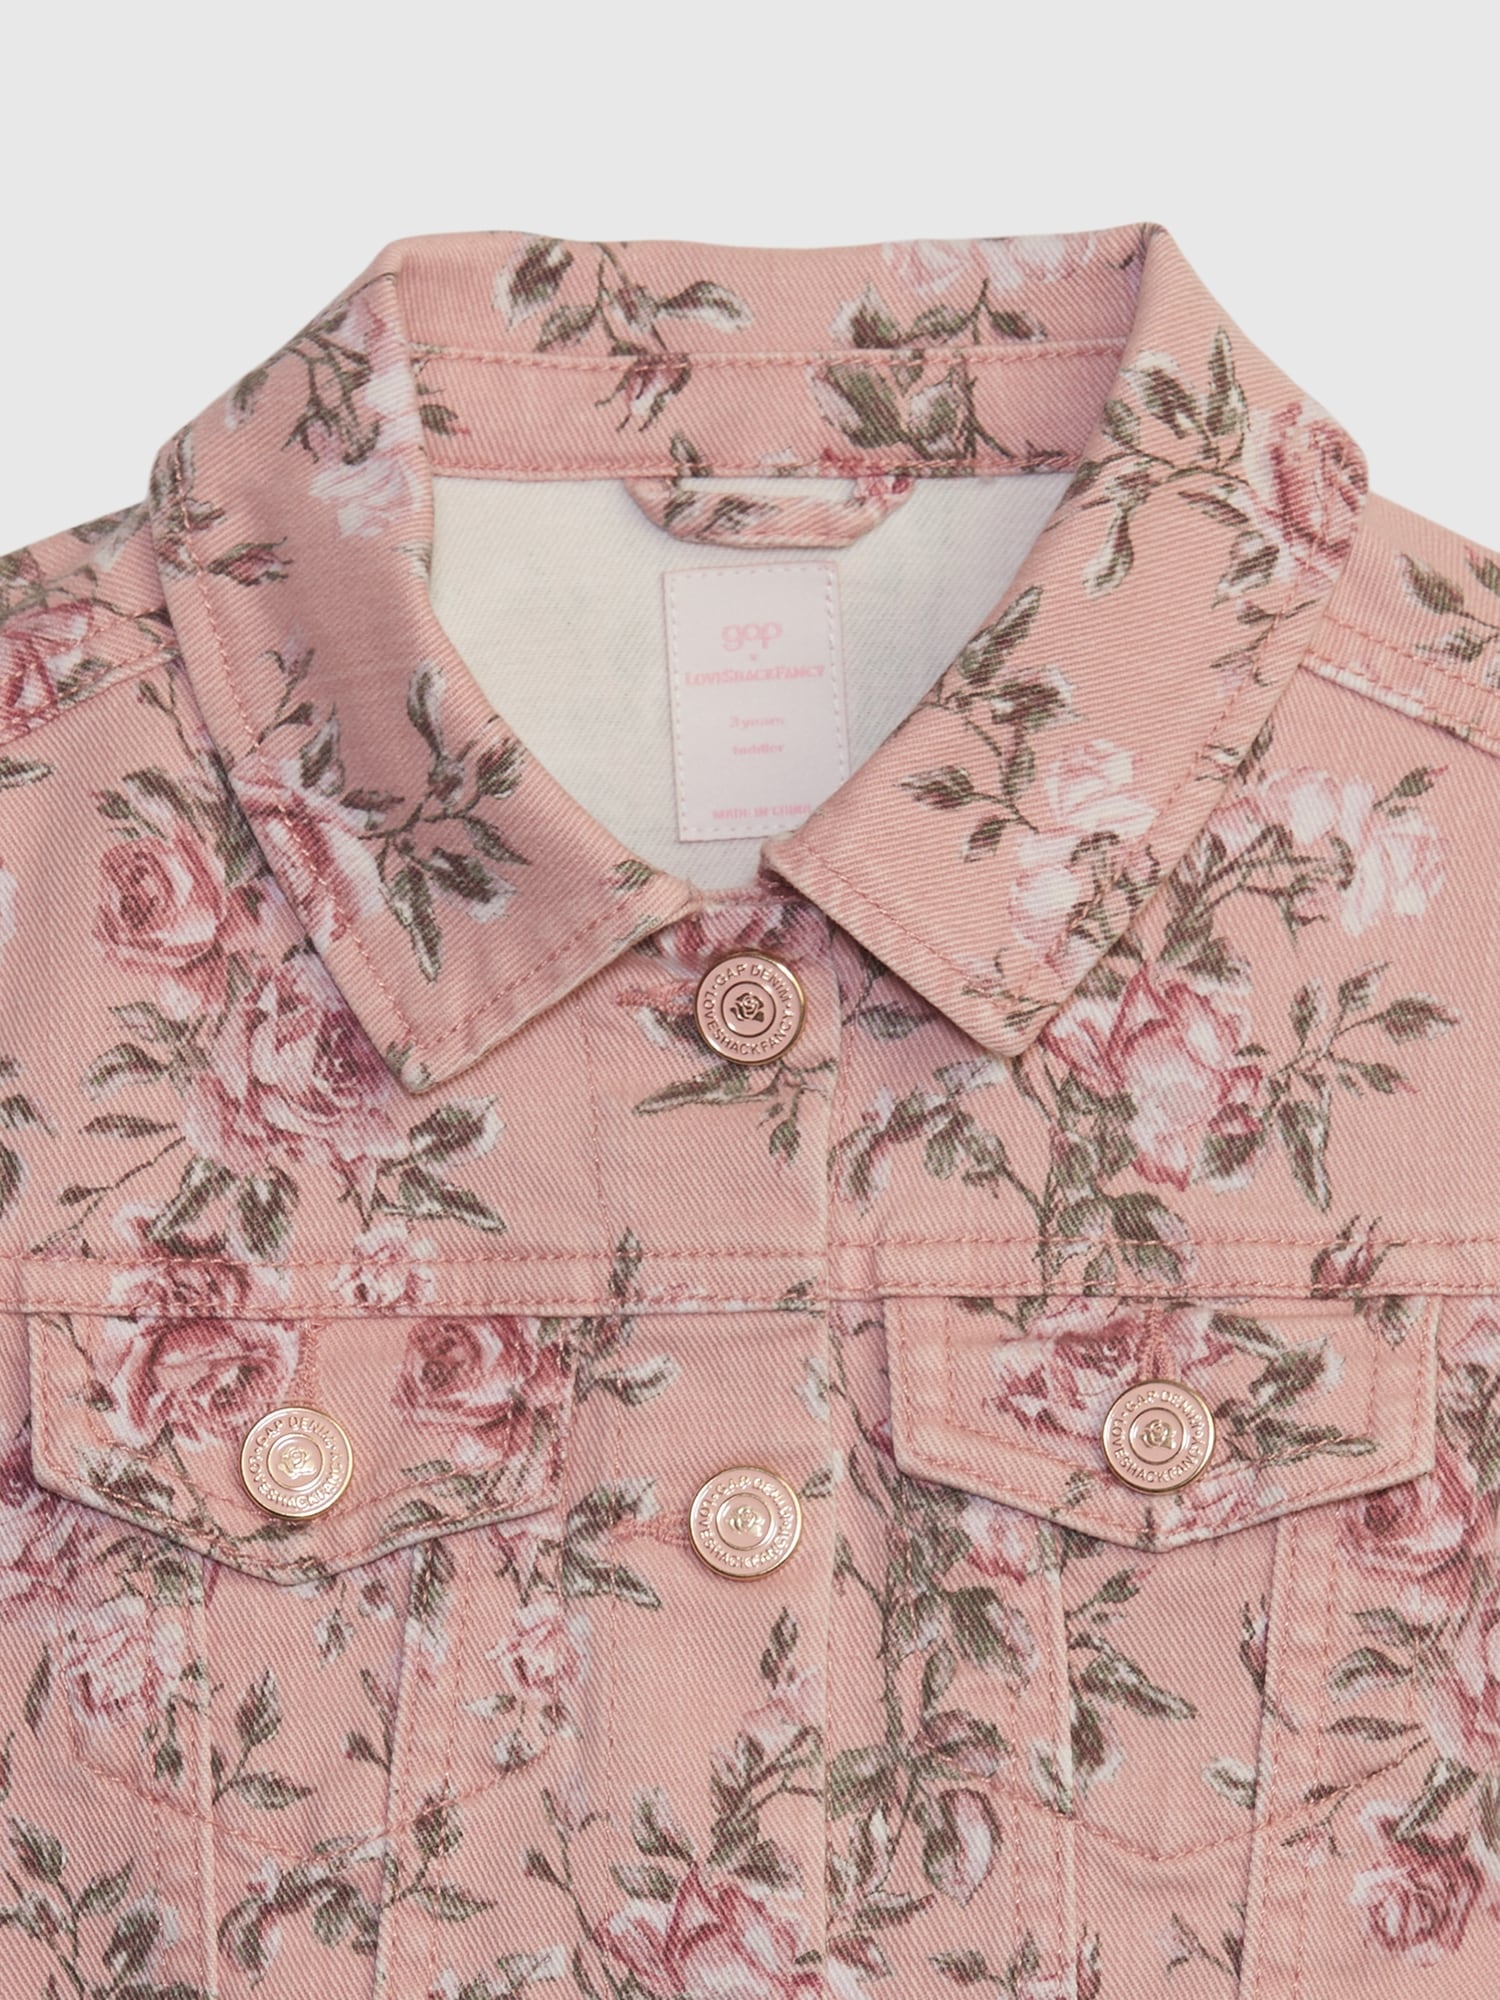 Toddler × Loveshackfancy Floral Icon Denim Jacket by Gap Pink Large Soft Floral Size 5 Yrs